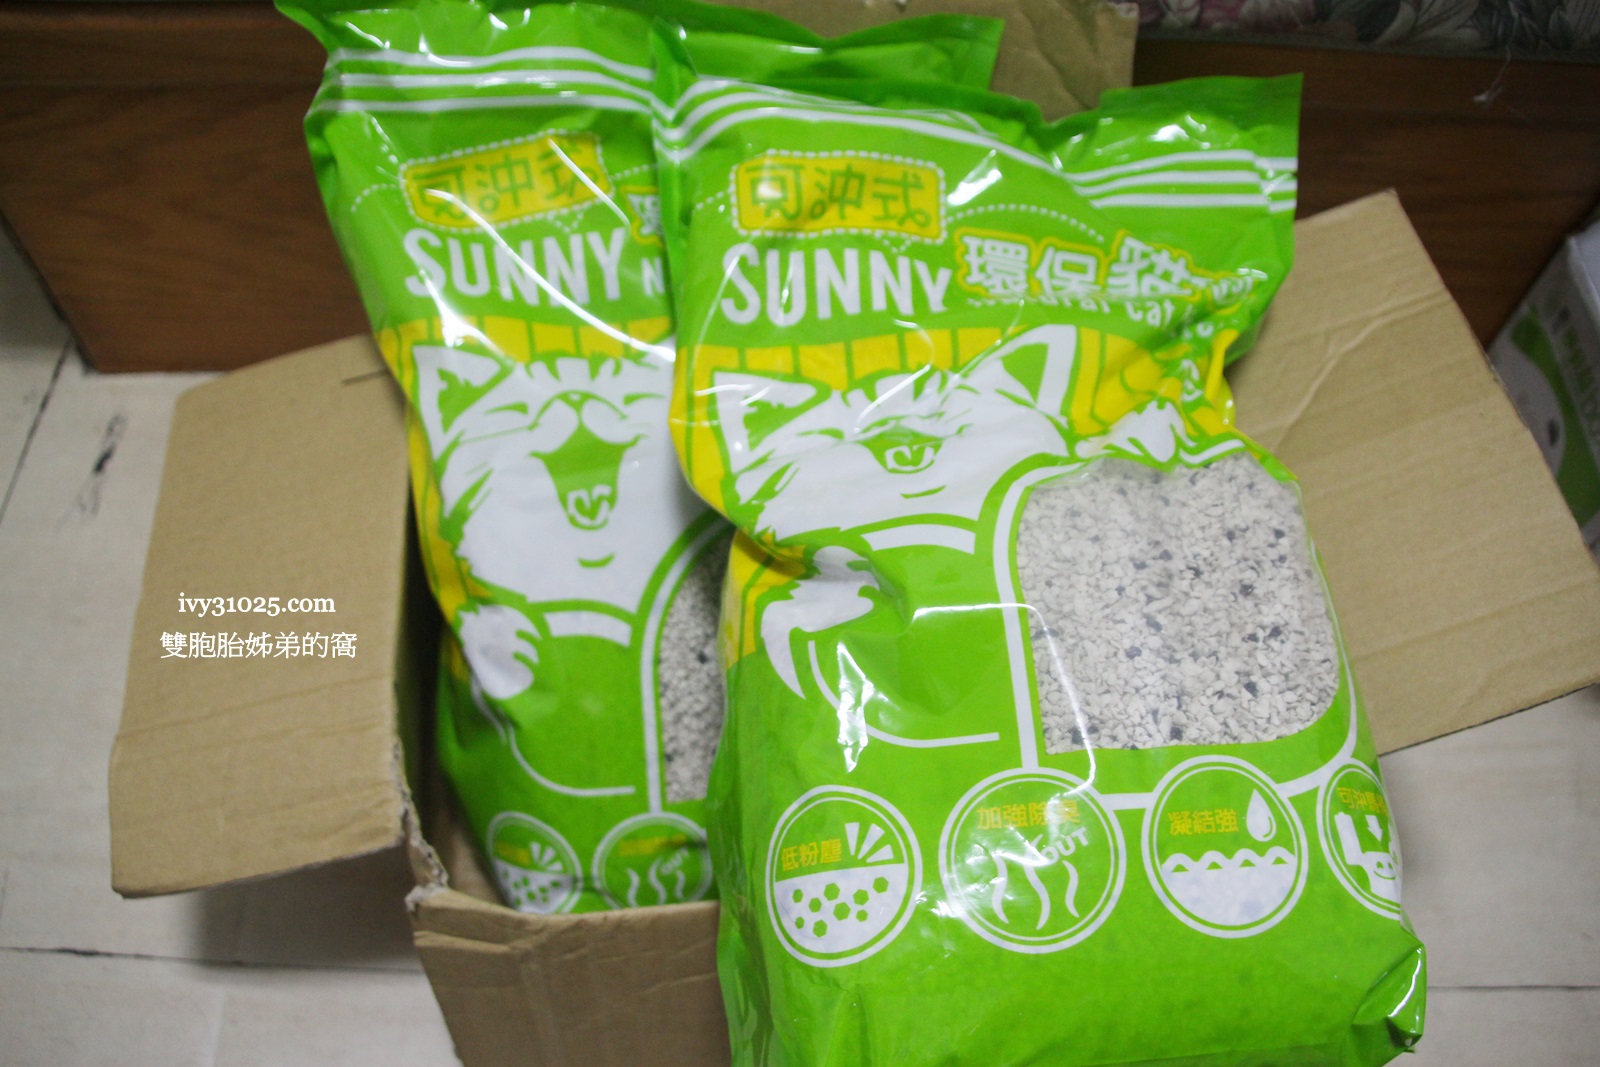 Sunny可沖式環保貓砂 | 豆腐砂 | 盆栽培養土 | 可沖馬桶 | 礦型輕盈吸收力